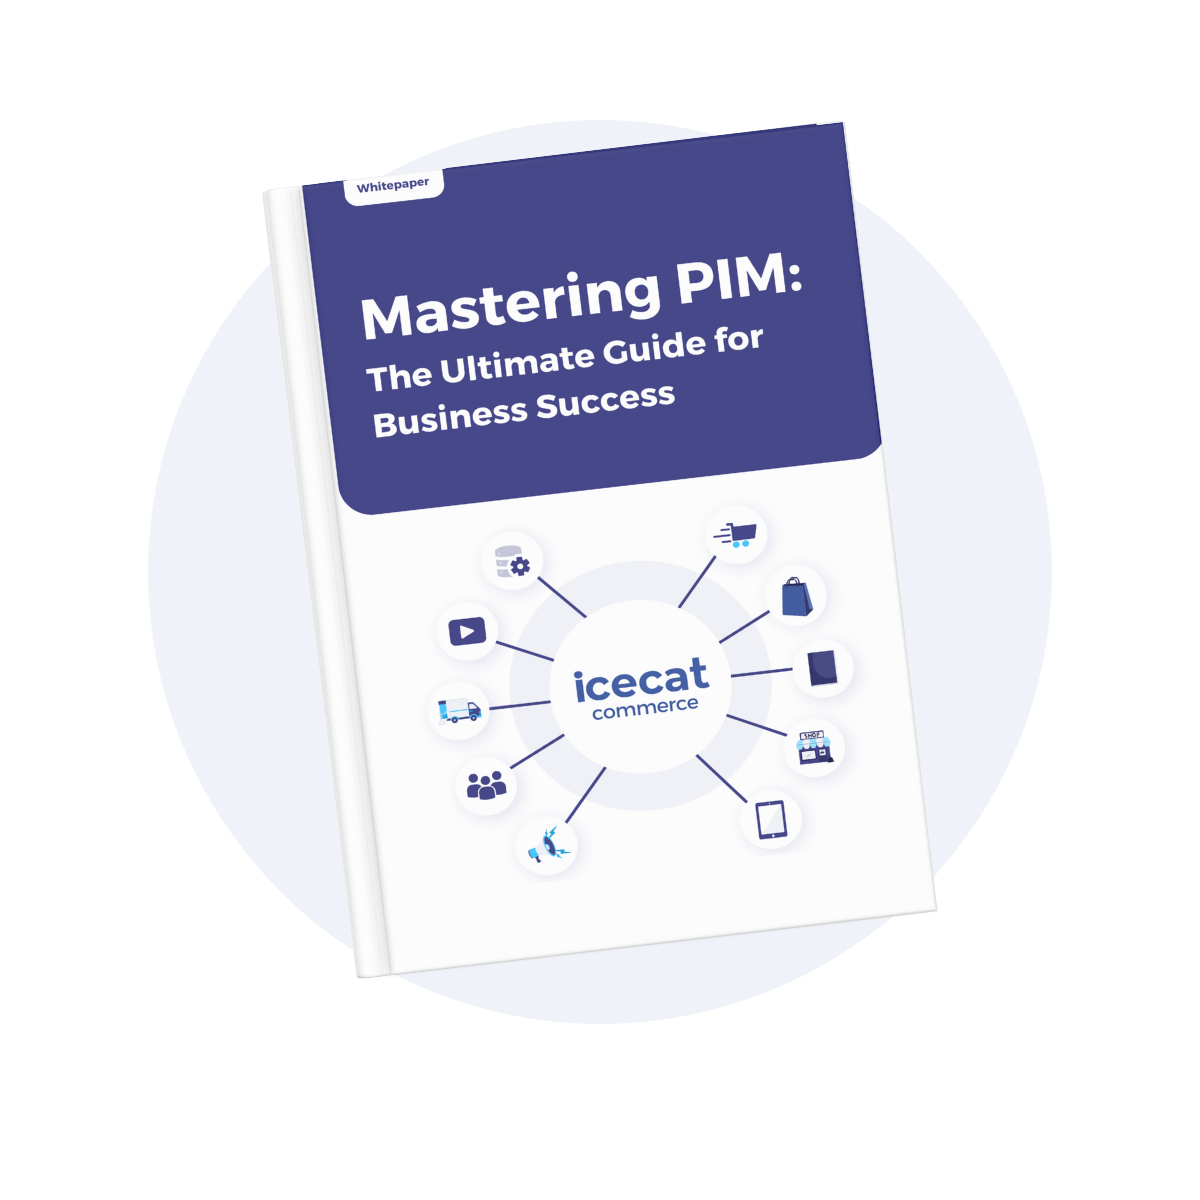 Mastering PIM Whitepaper